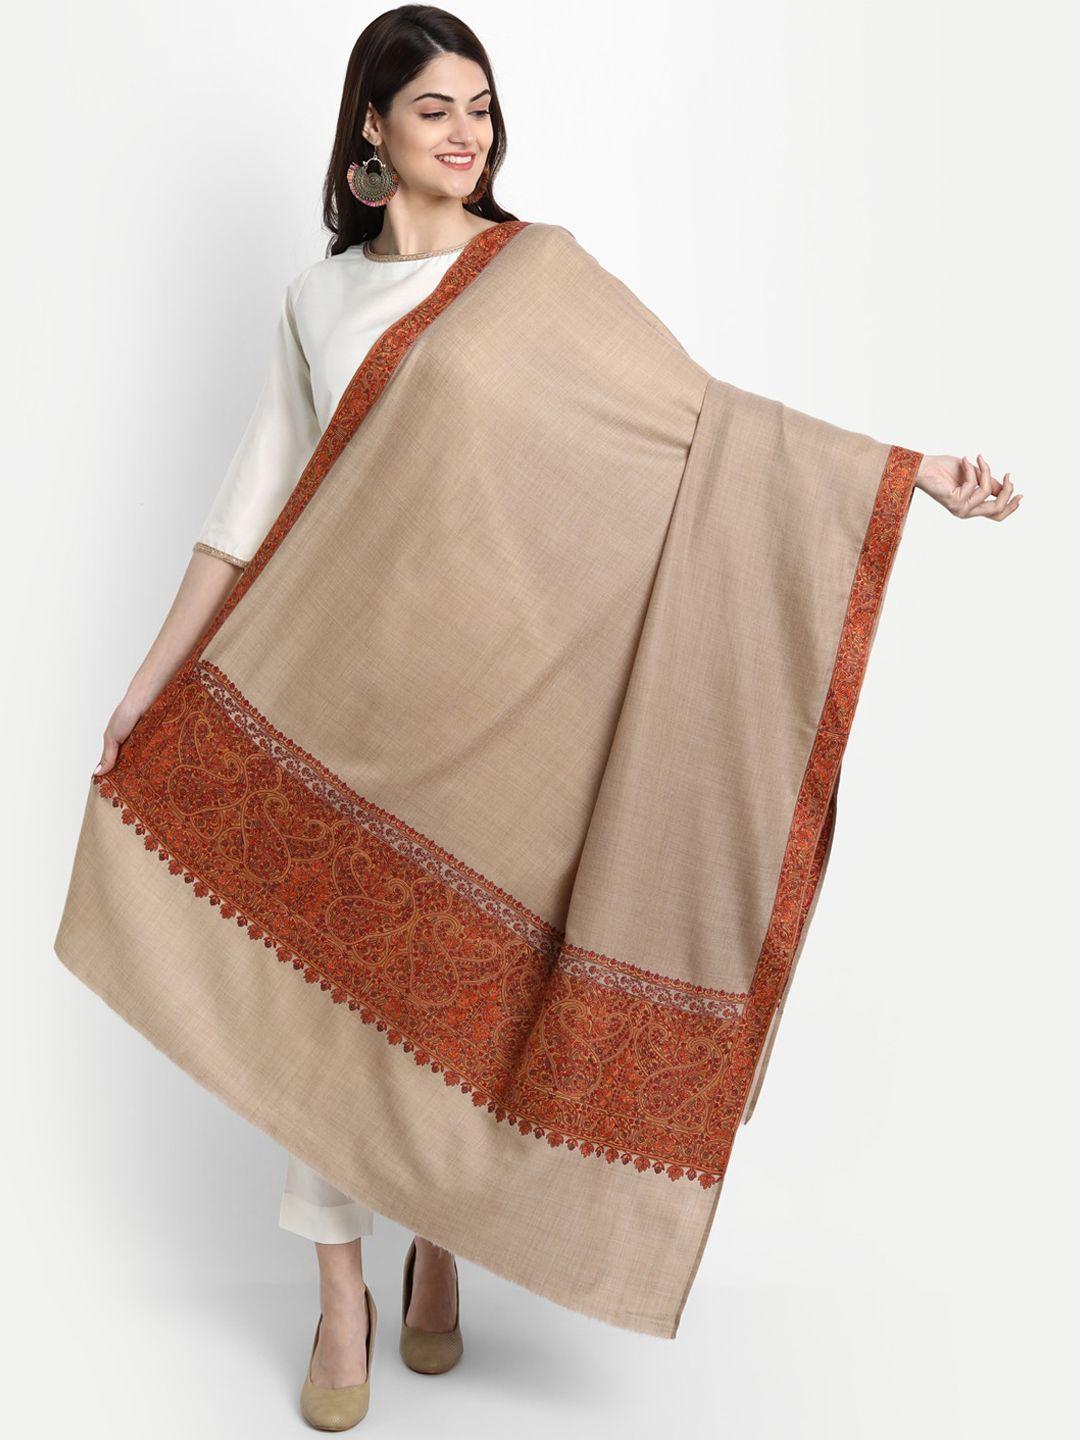 zamour women beige & brown embroidered kashmiri shawl